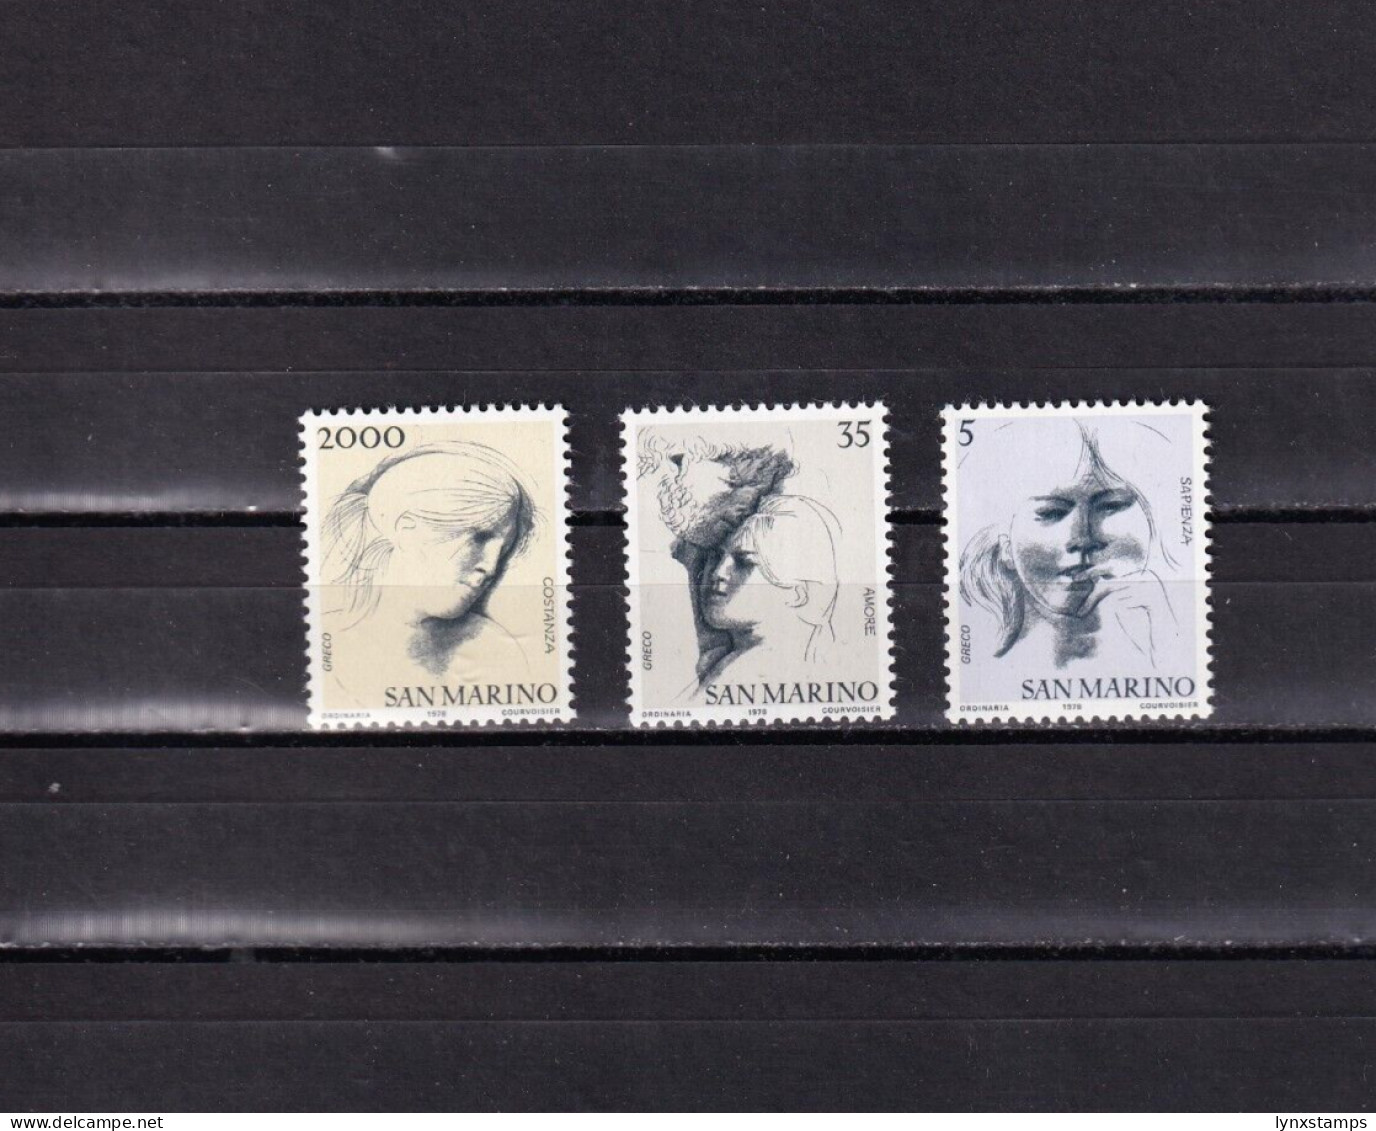 SA04 San Marino 1978 Civic Virtues Mint Stamps - Unused Stamps